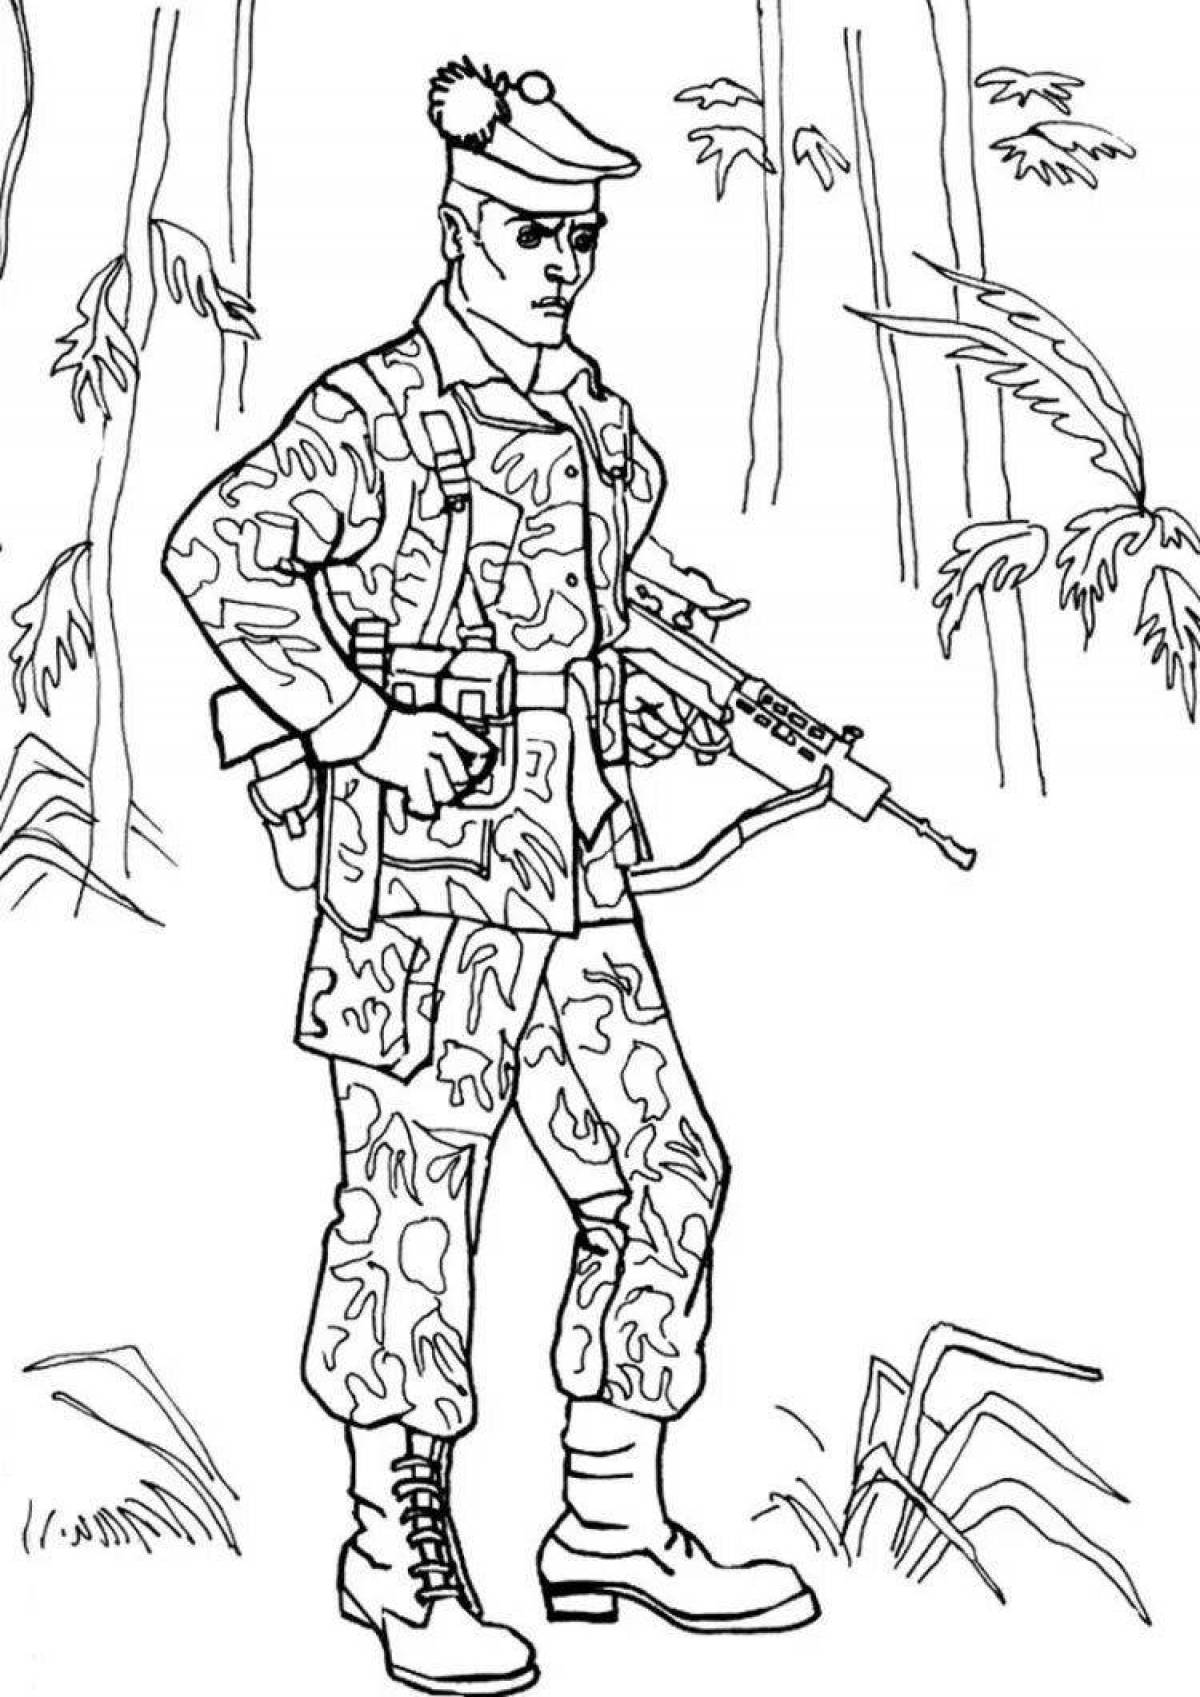 Unique military uniform coloring book